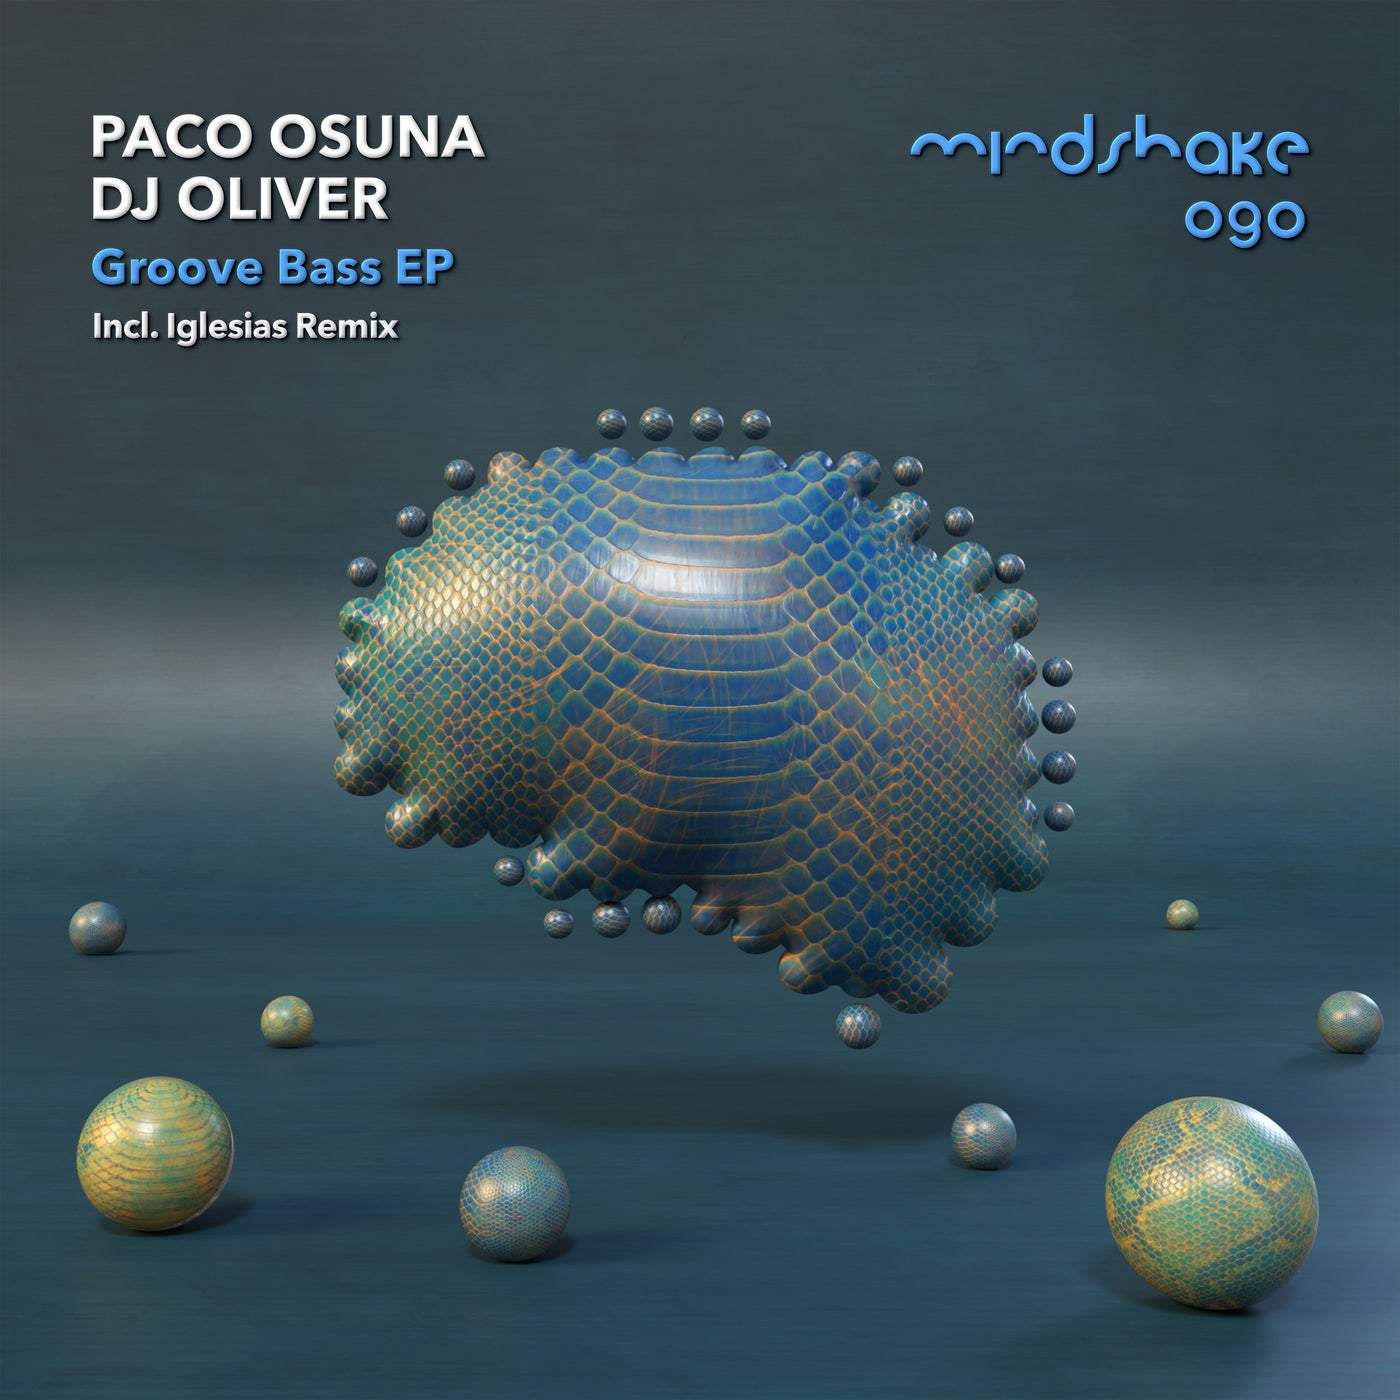 Download DJ Oliver, Paco Osuna - Groove Bass EP [MINDSHAKE090] on Electrobuzz